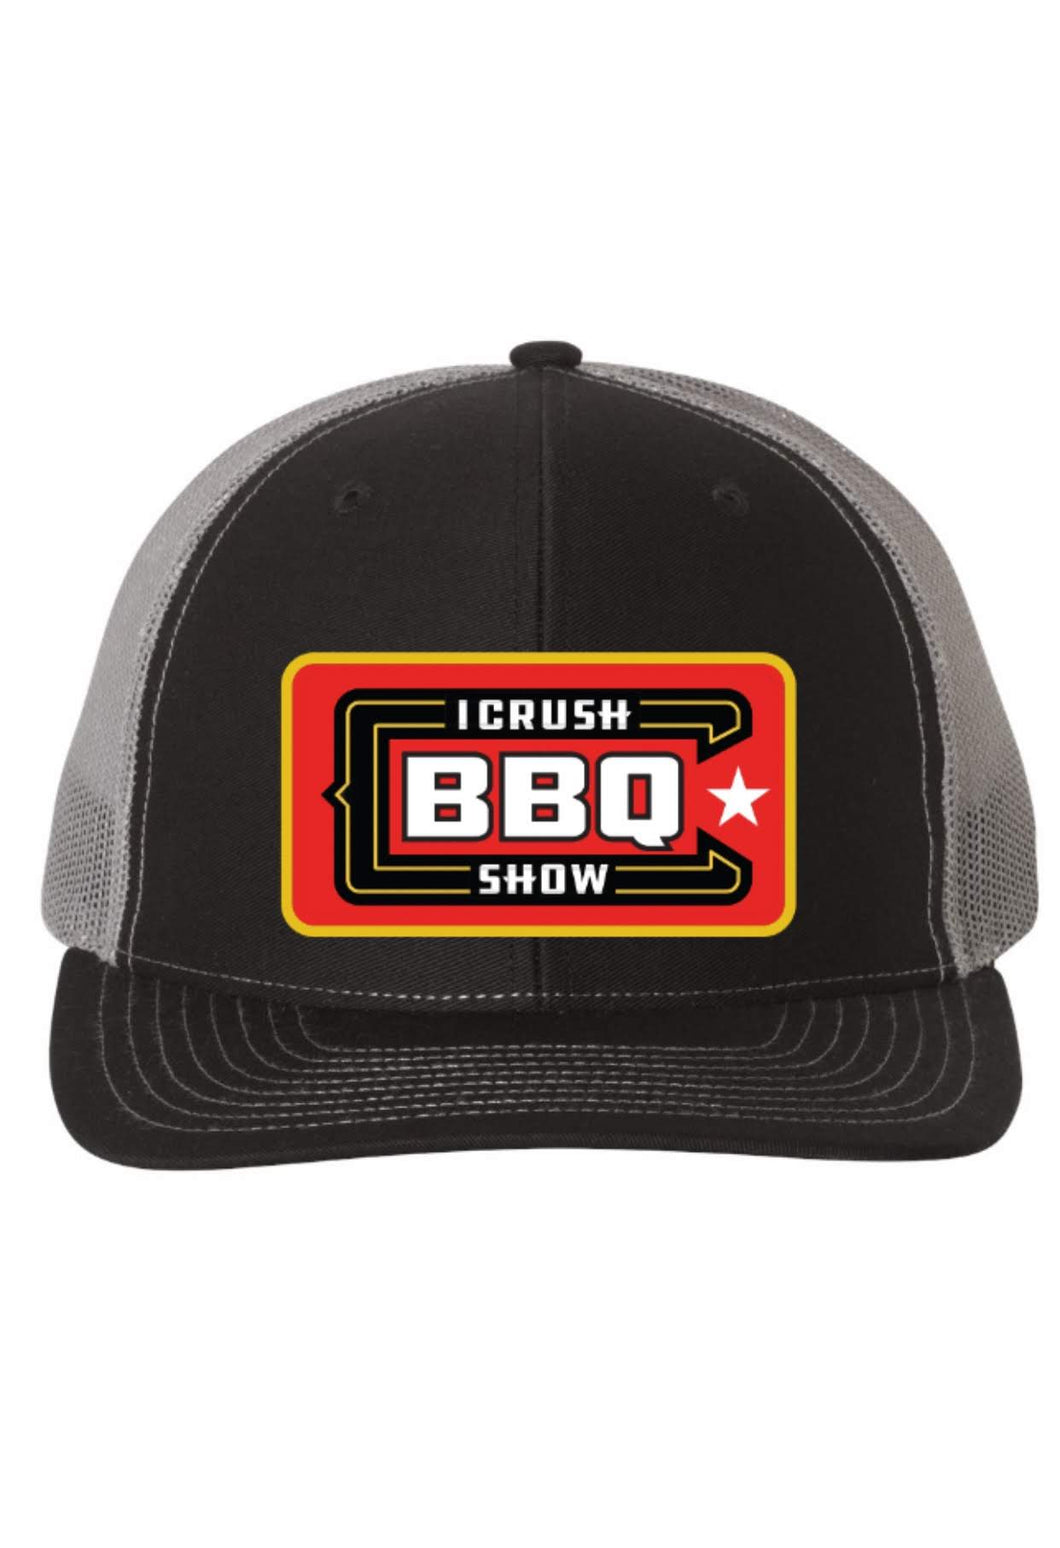 I Crush BBQ Show Truckers Hat